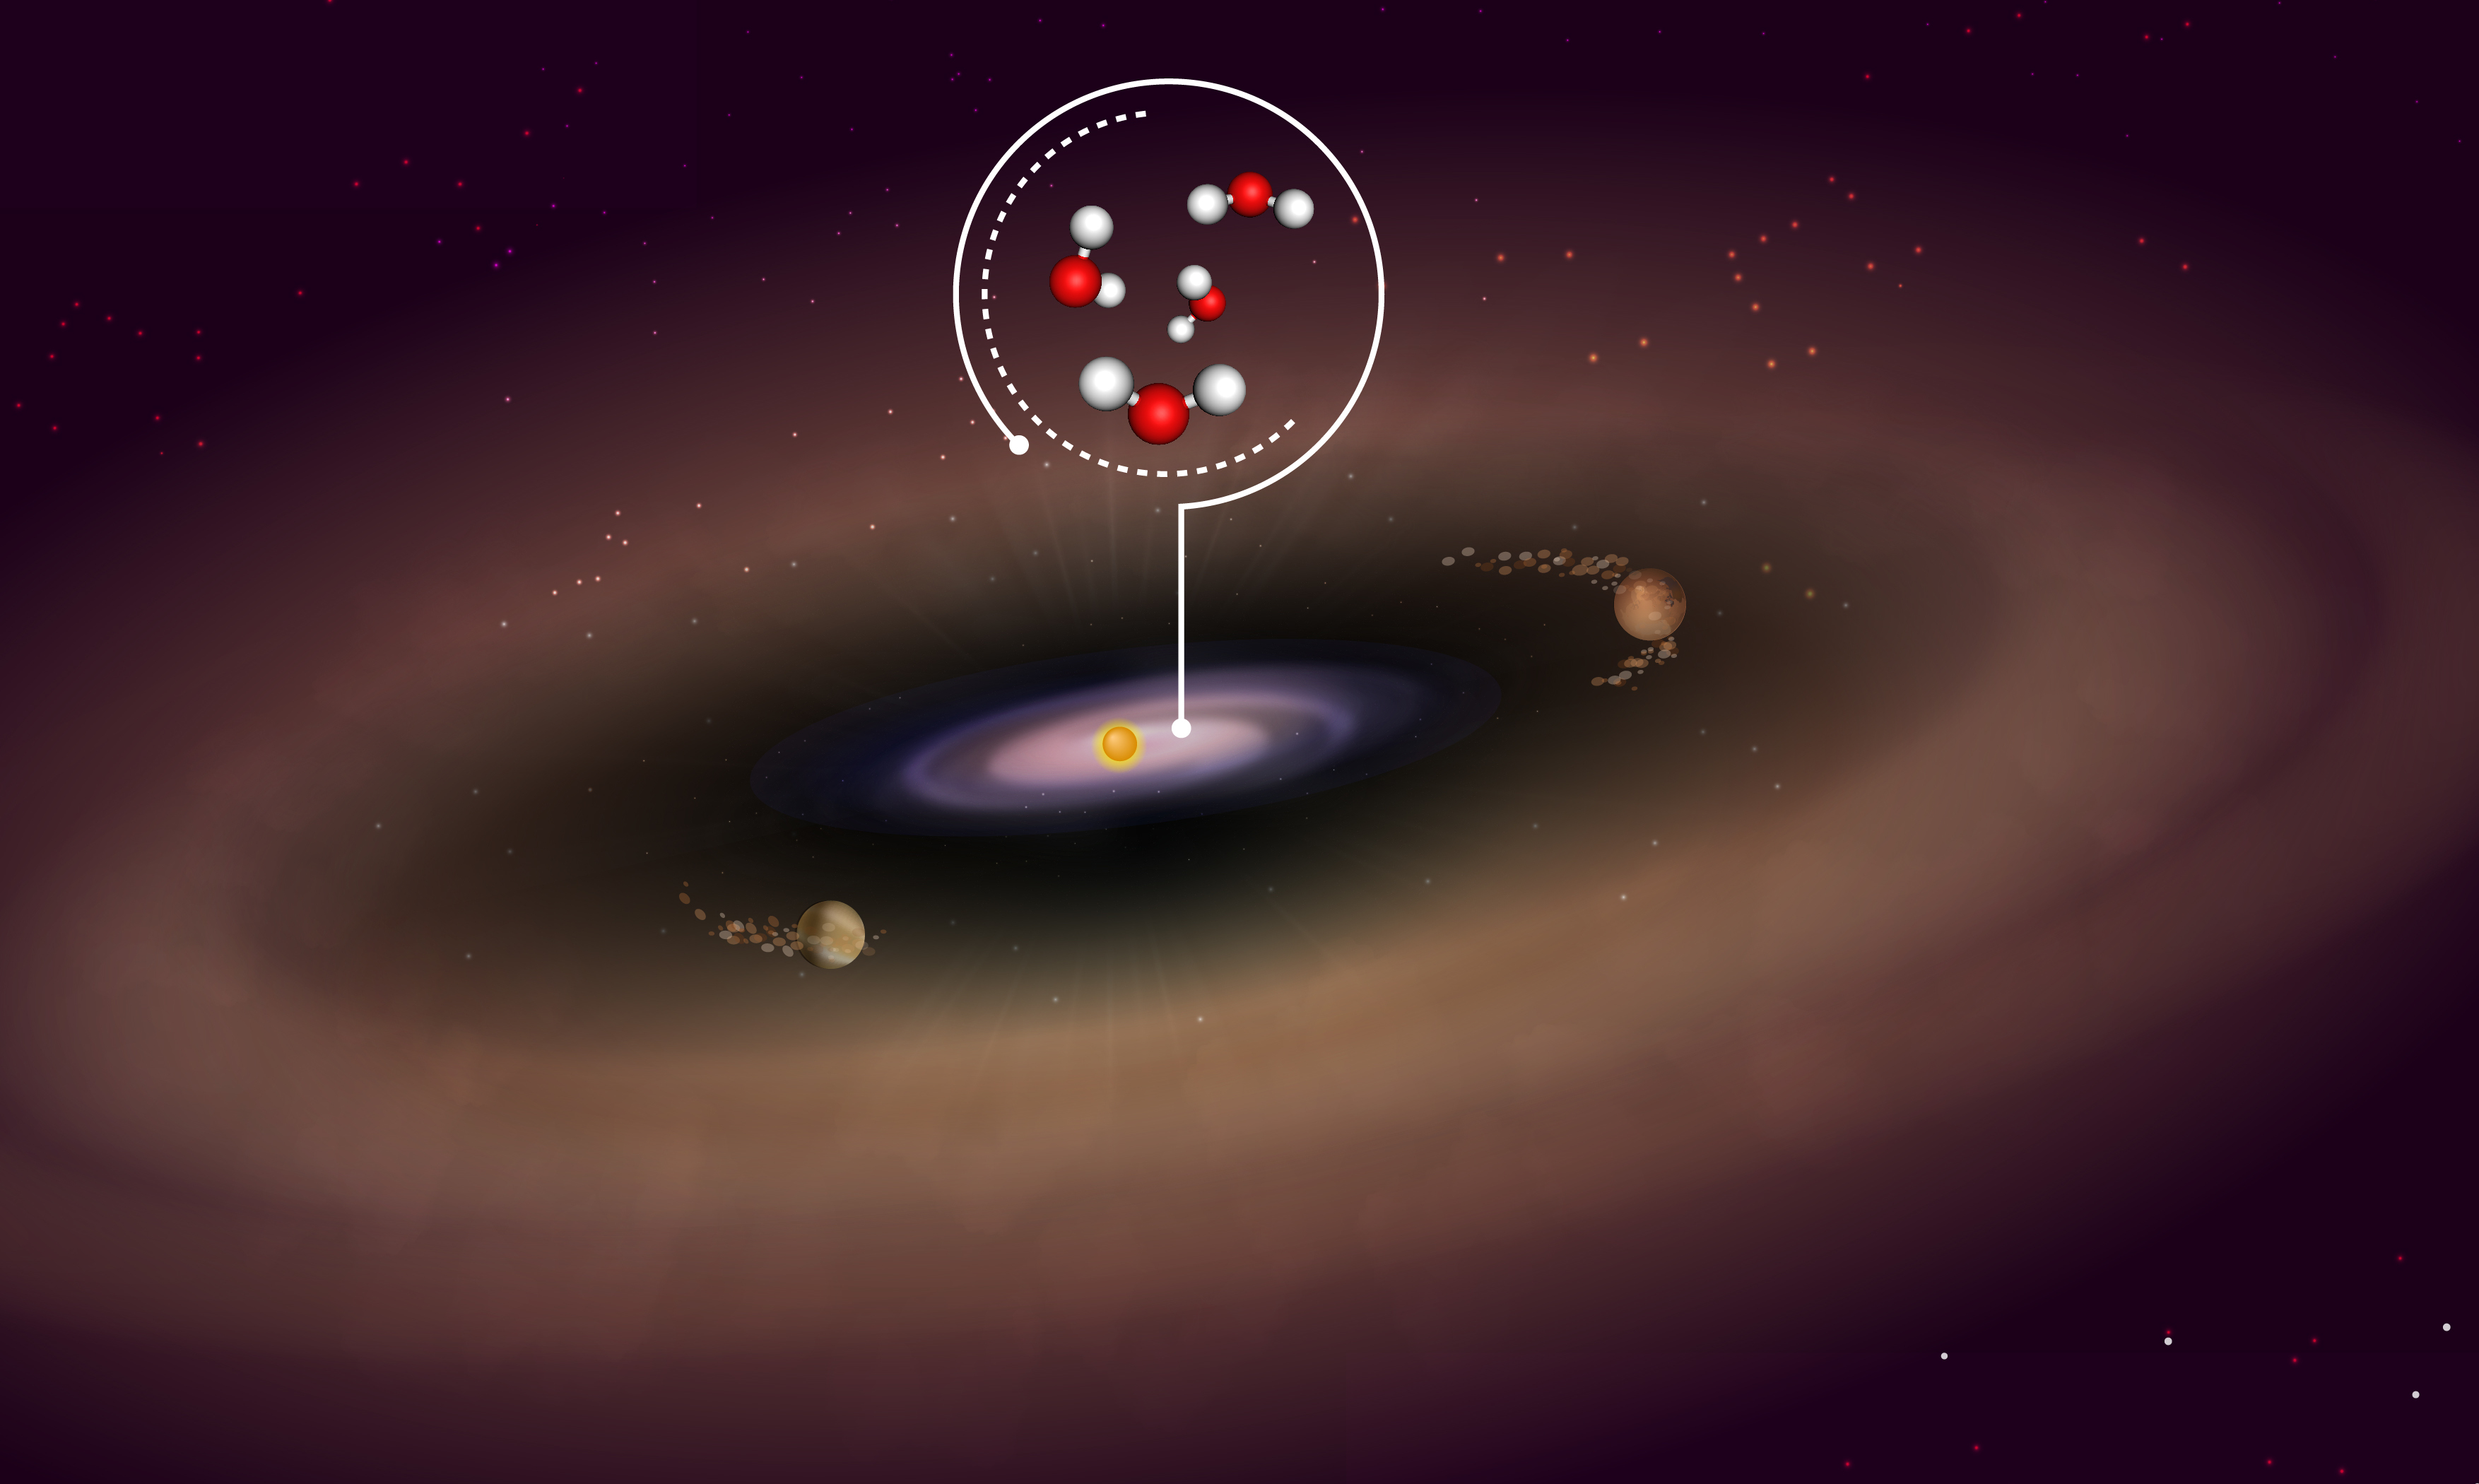 Could a habitable planet orbit a black hole?, Science